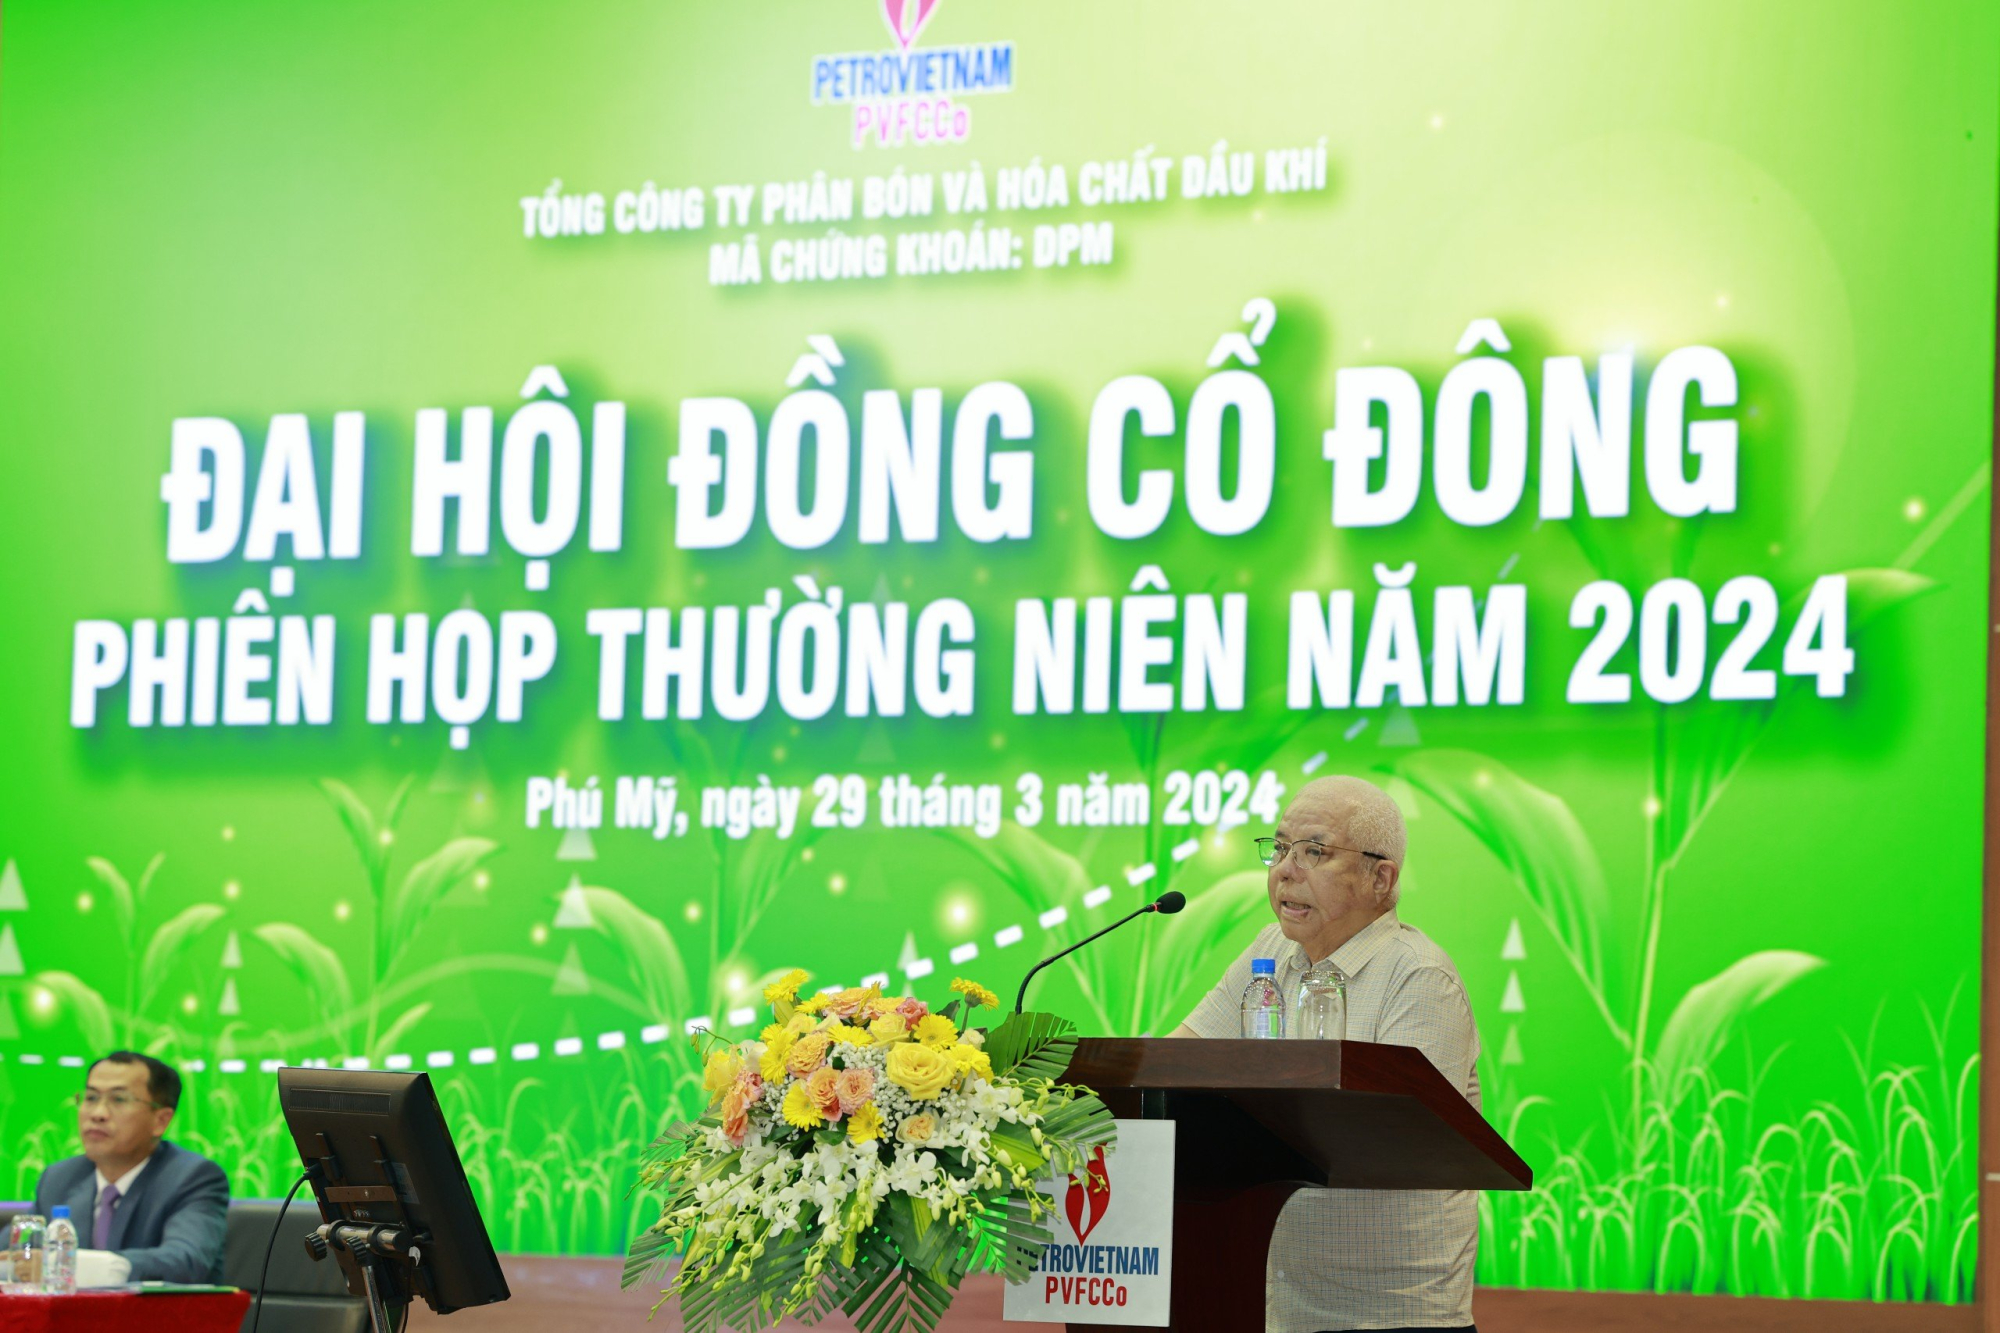 pvfcco to chuc thanh cong phien hop dai hoi dong co dong thuong nien nam 2024 hinh 8